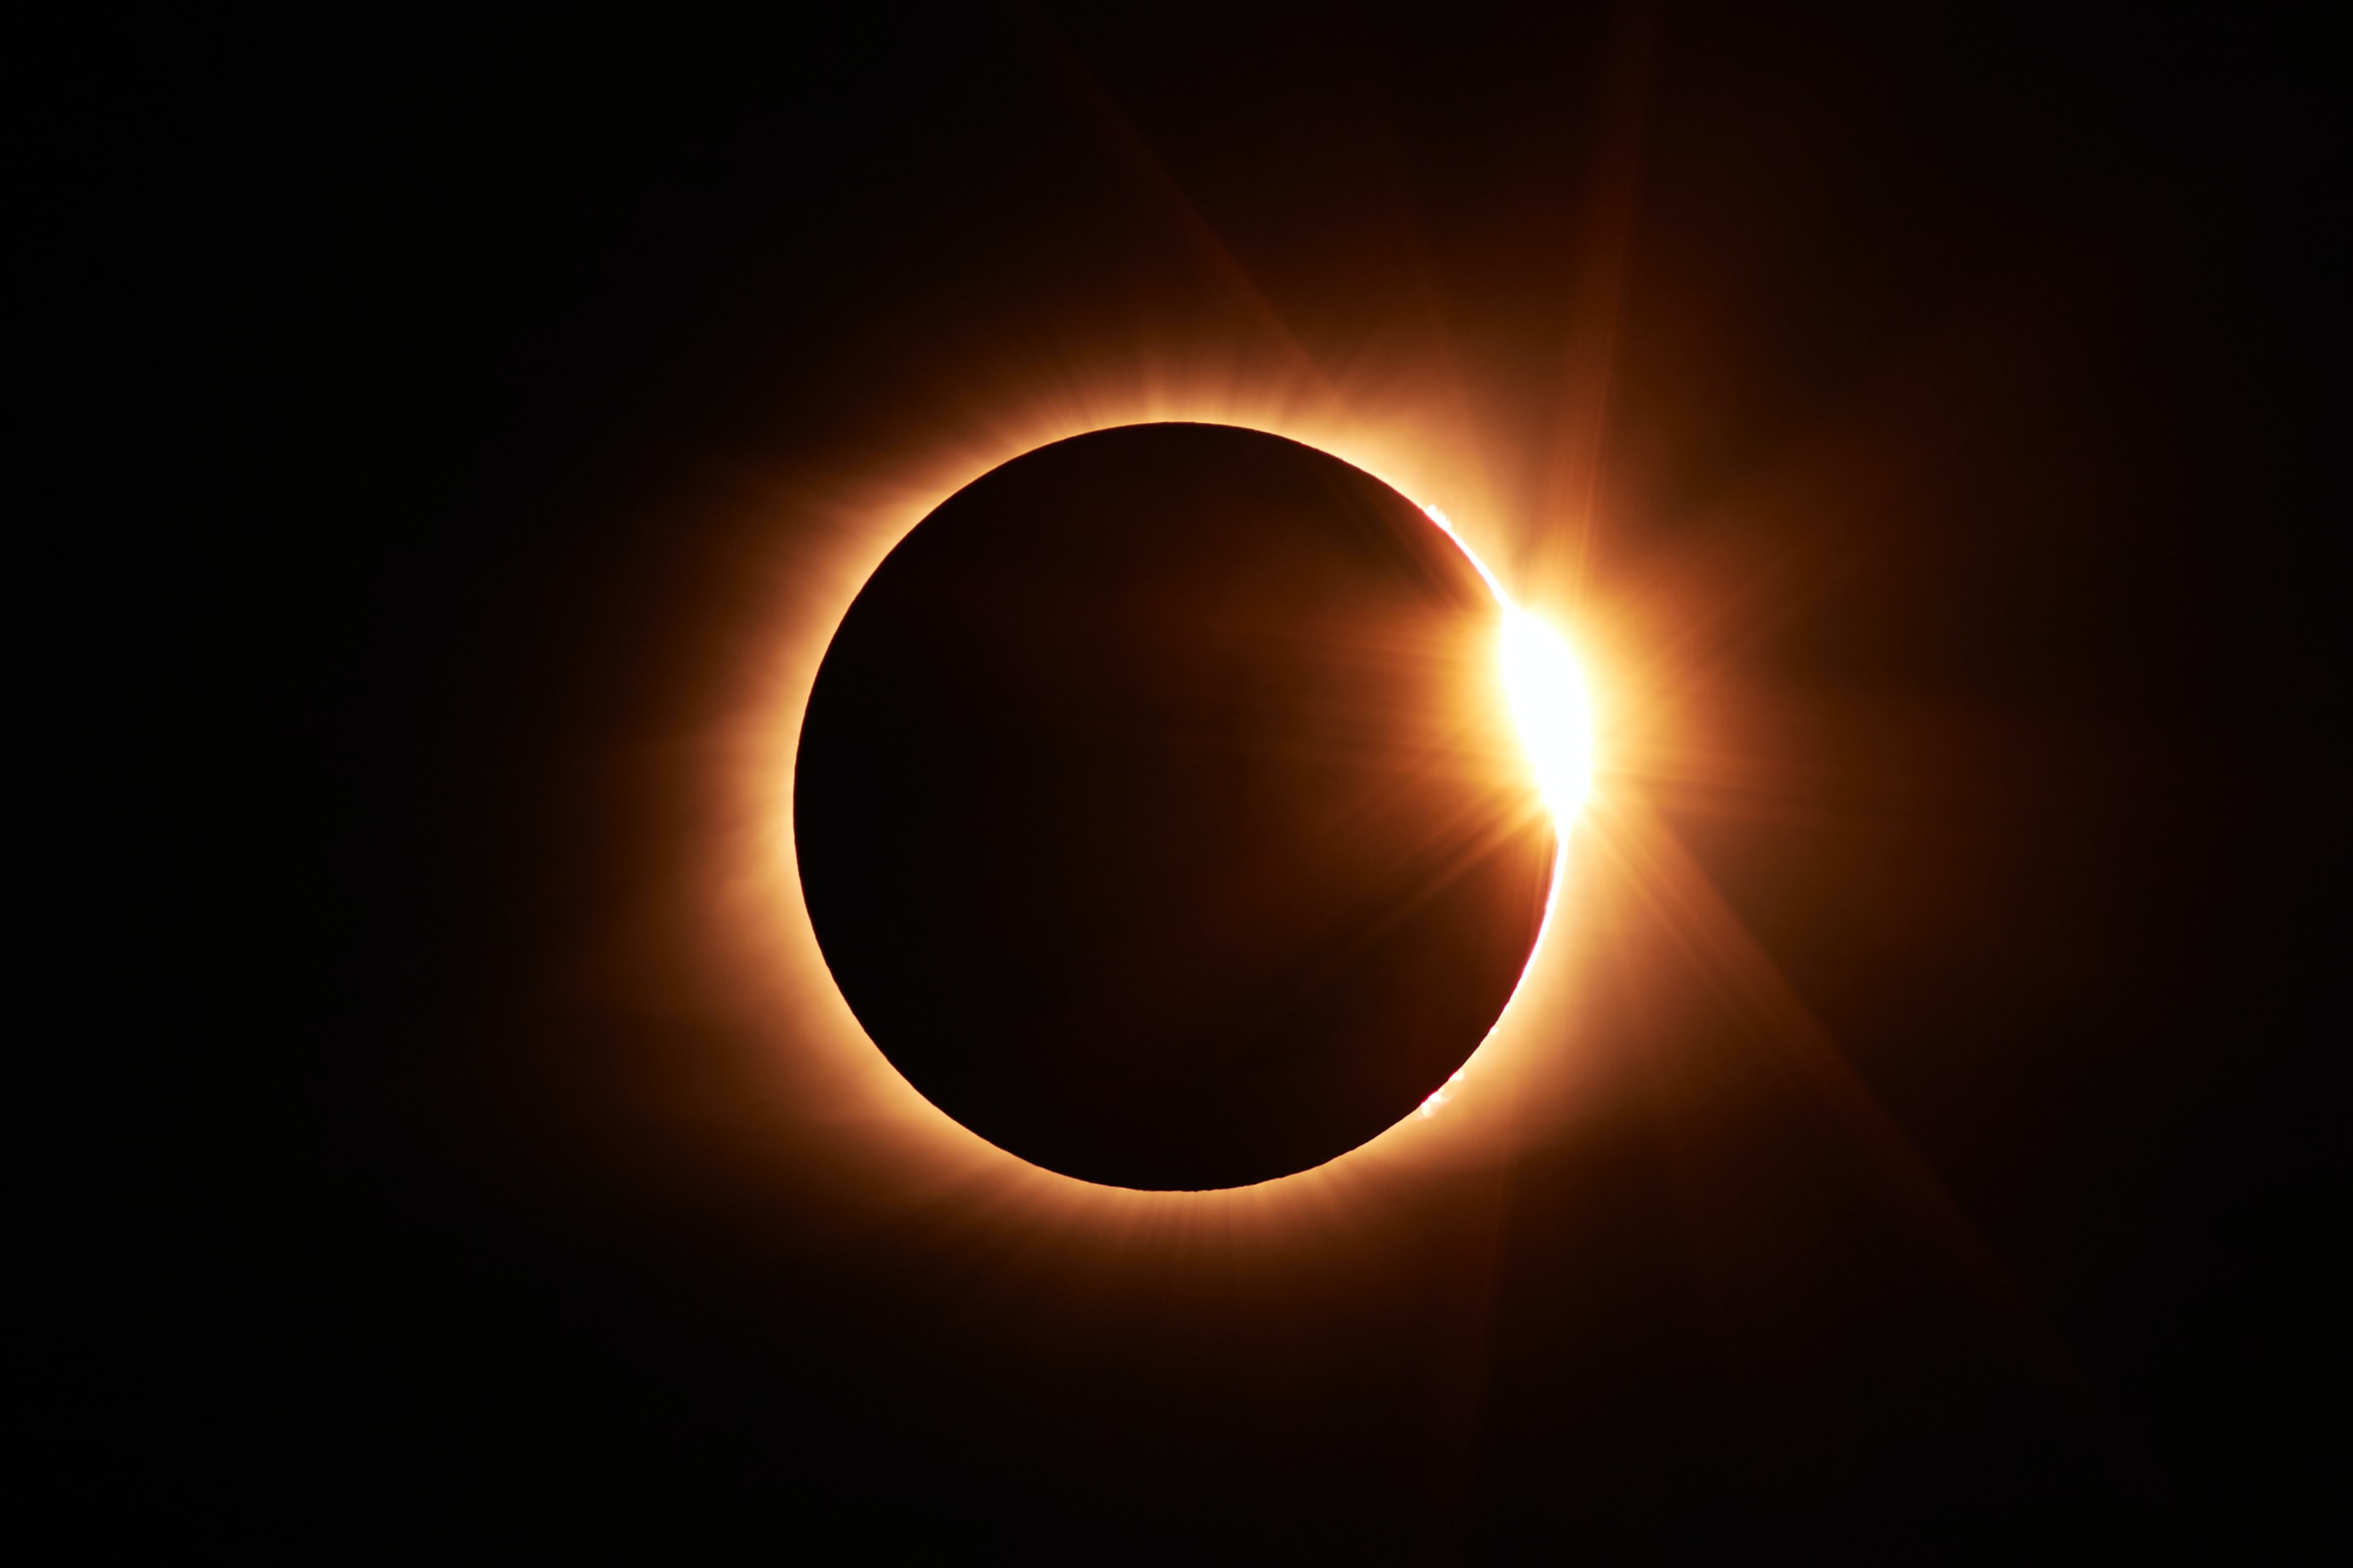 Eclipse Anel de Fogo. Crédito: Jongsun Lee via Unsplash